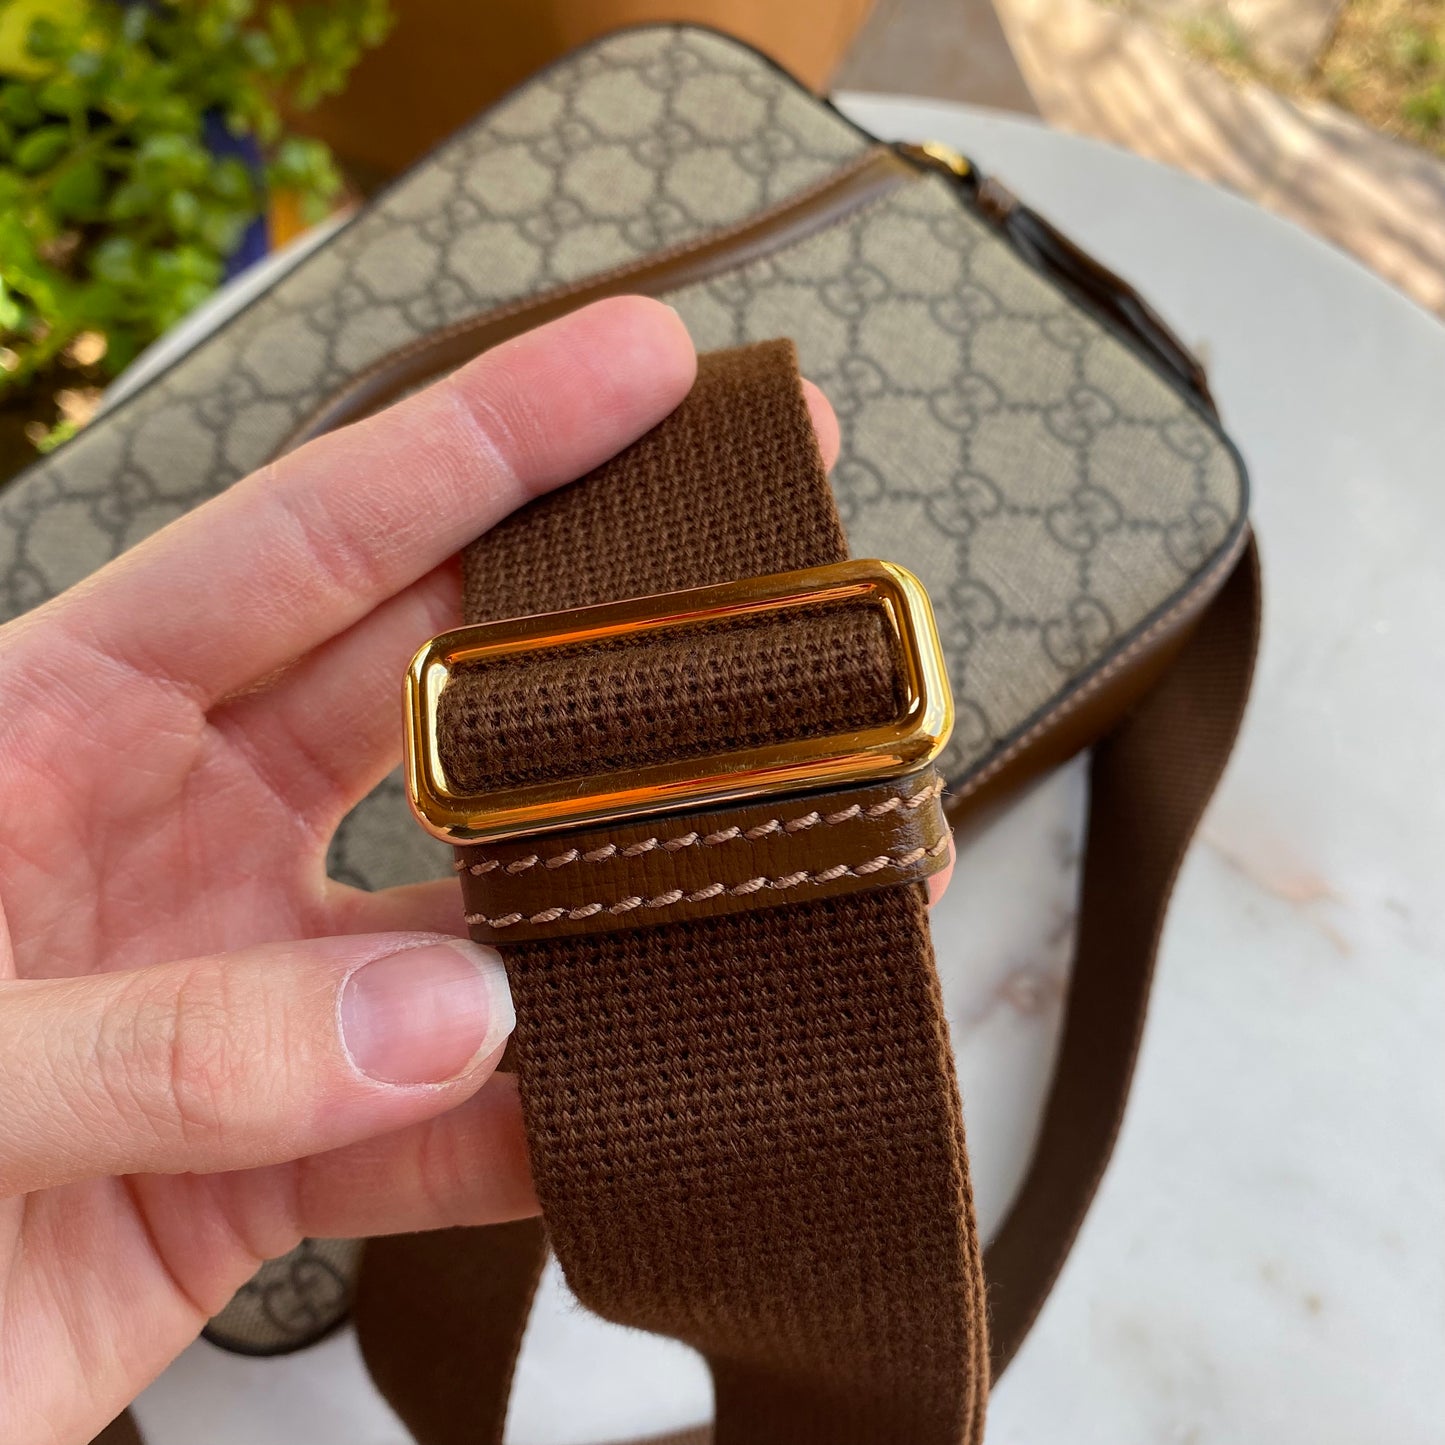 Gucci Messenger Bag with Interlocking G